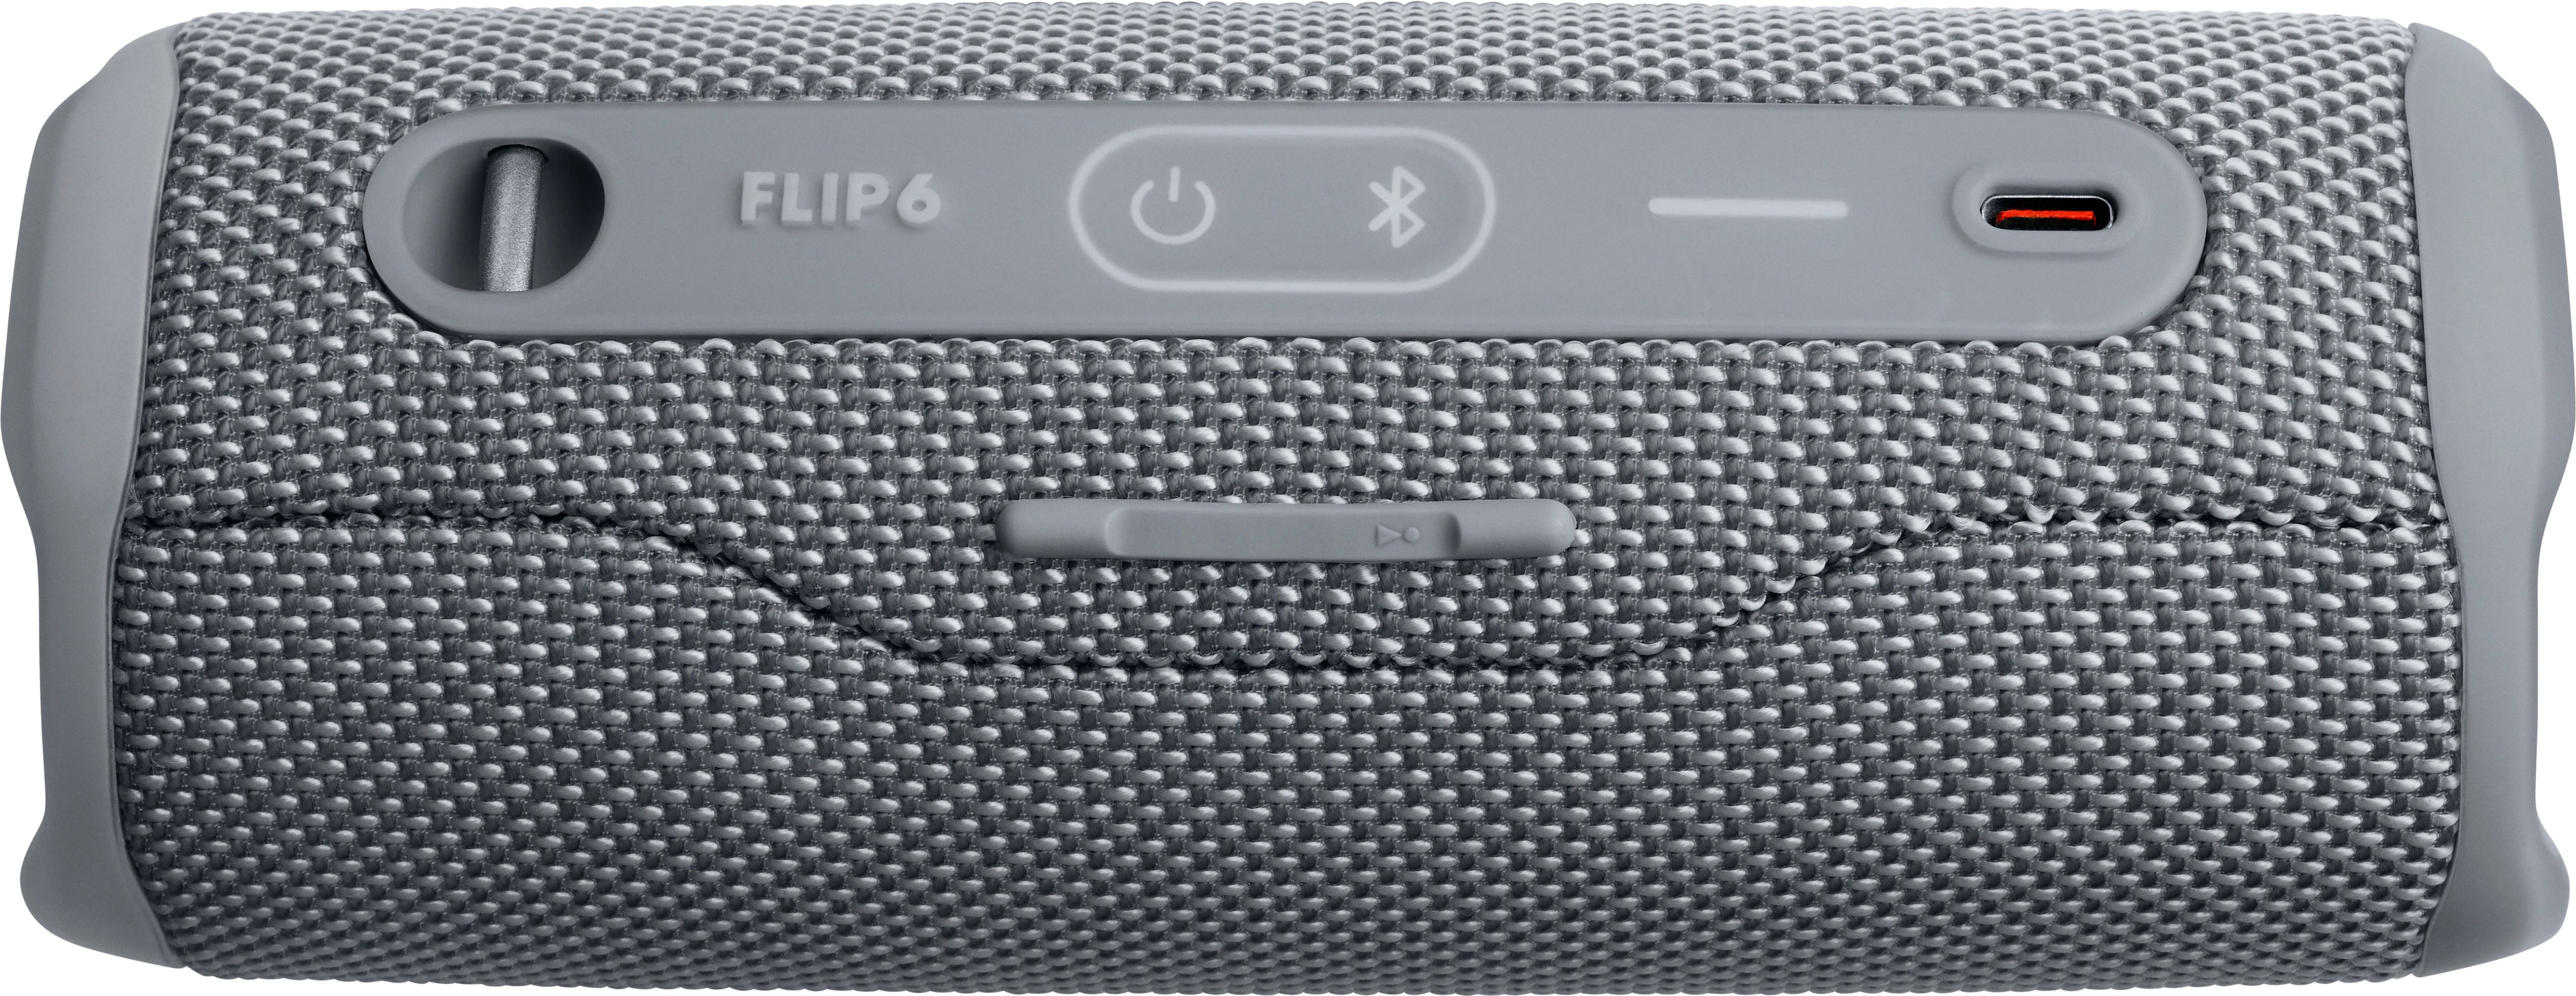 JBL FLIP6 Portable Waterproof Speaker Gray JBLFLIP6GREYAM - Best Buy